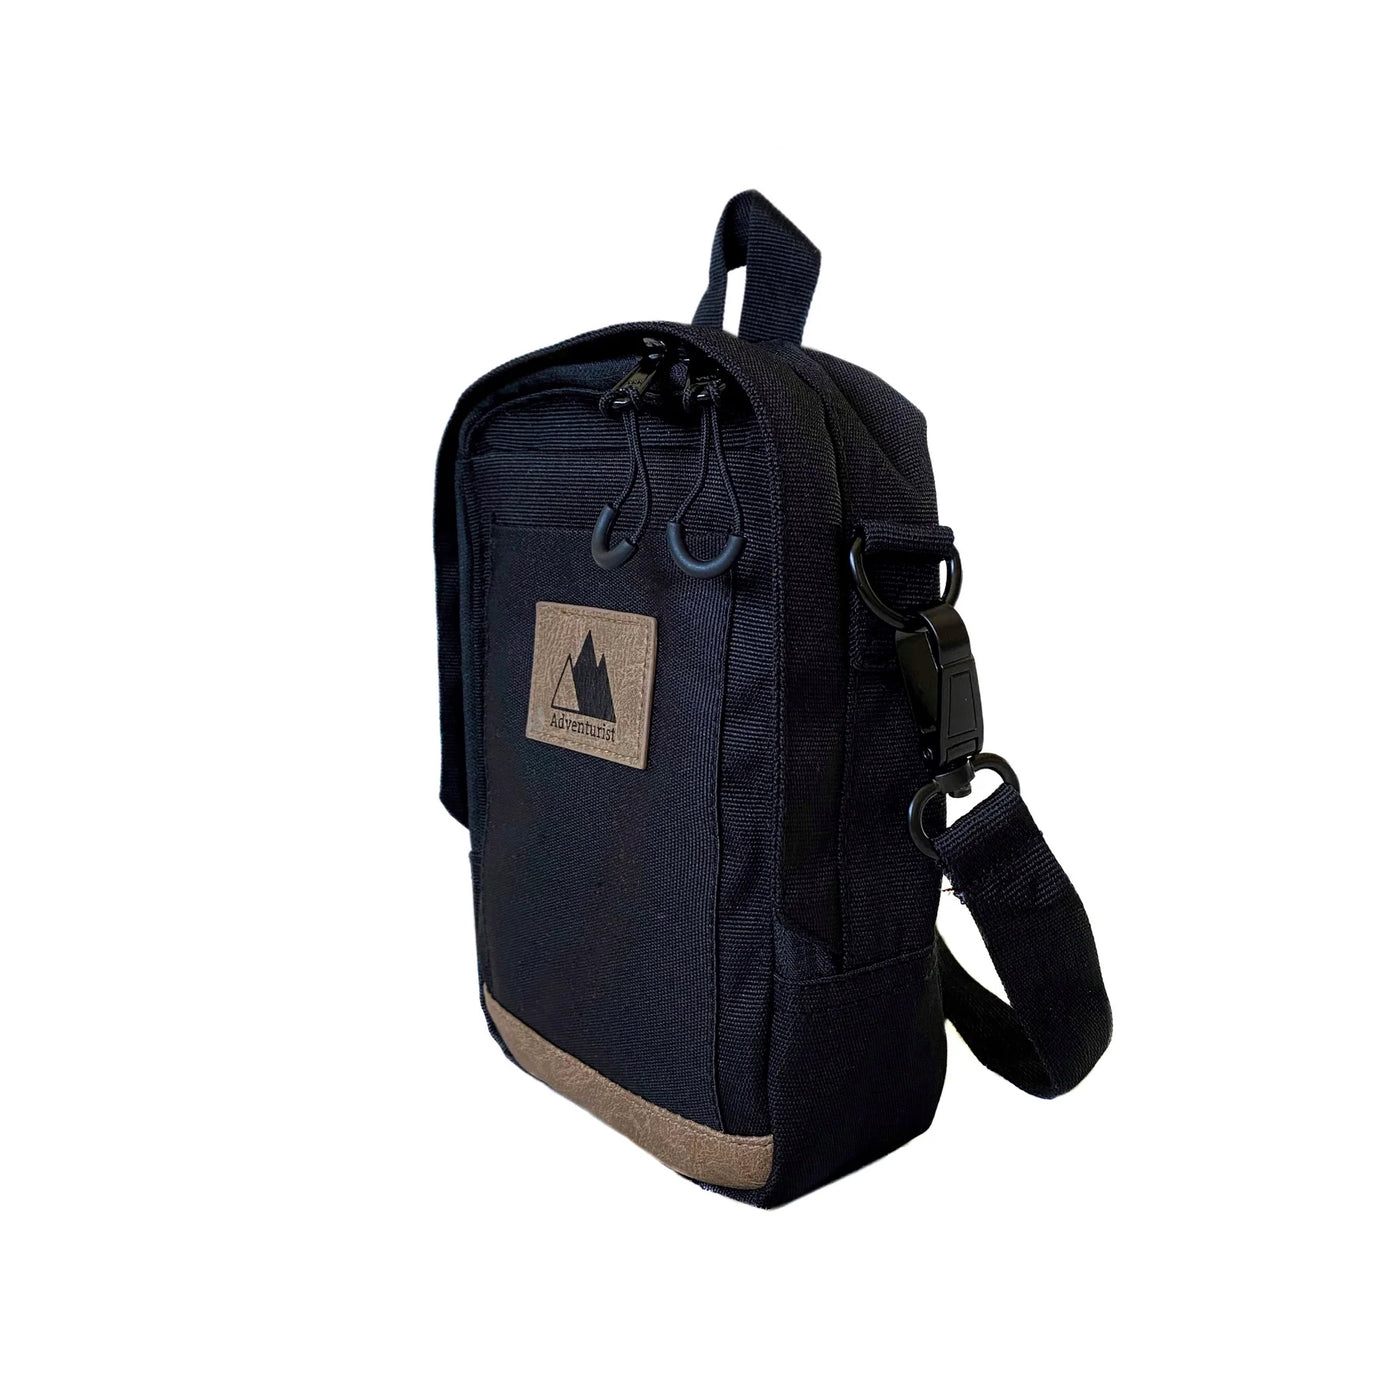 Adventurist Sidekick Crossbody Bag - Black